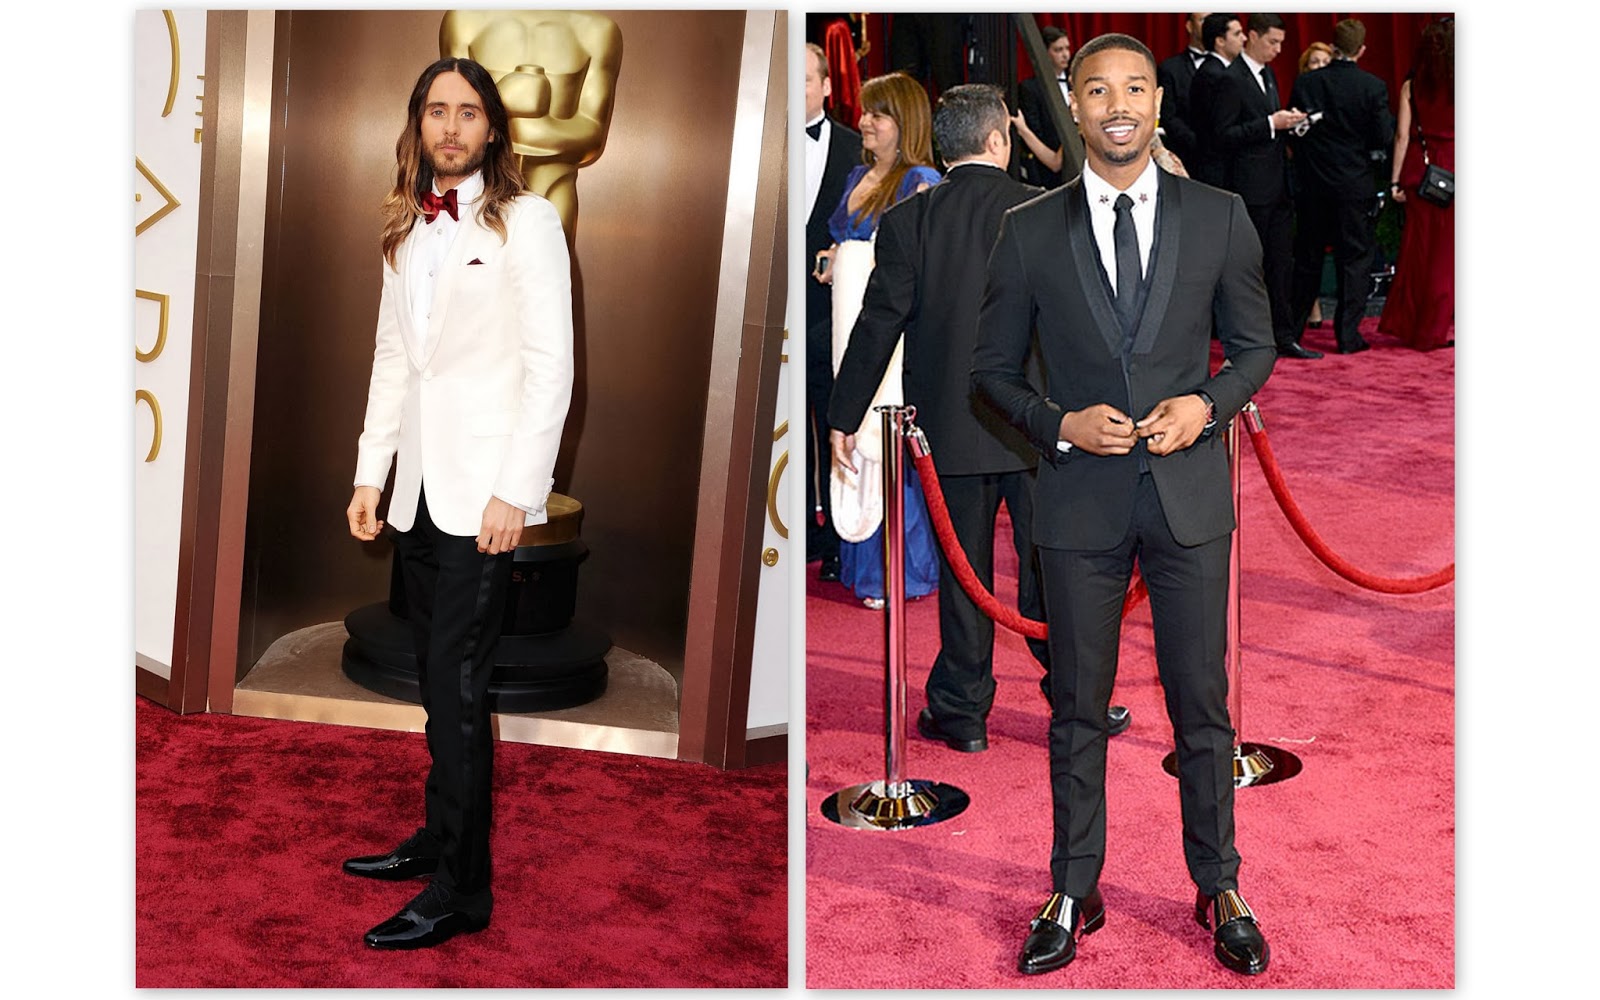 Red carpet - Best dressed of the Oscars 2014 | C U R L Y C U R V E S1600 x 1000